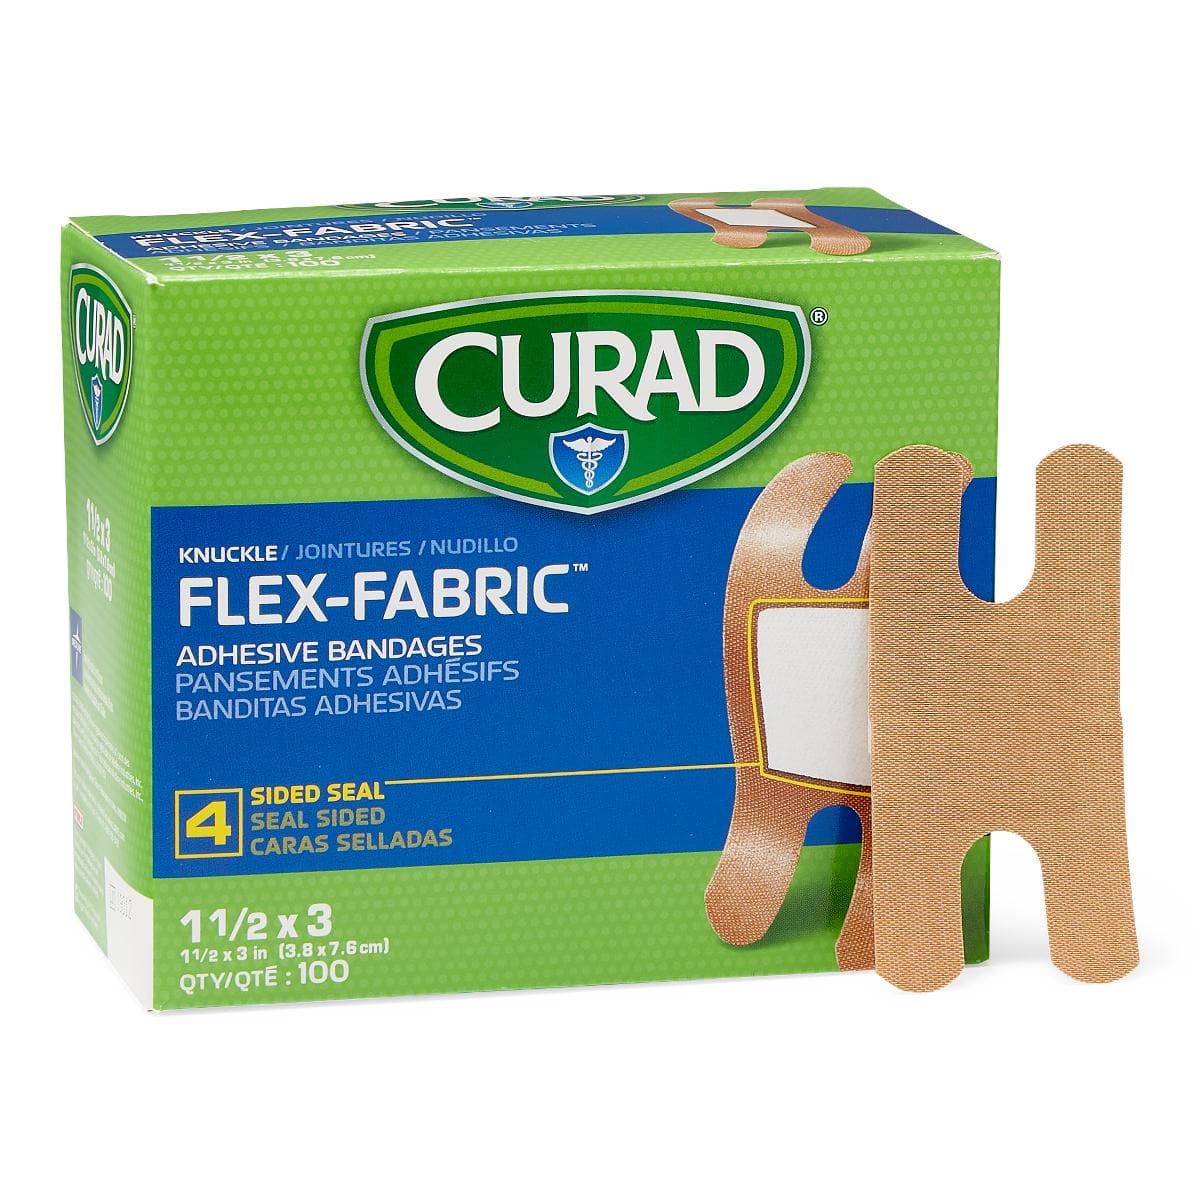 Medline Knuckle / Box of 100 Medline CURAD Flex-Fabric Adhesive Bandages